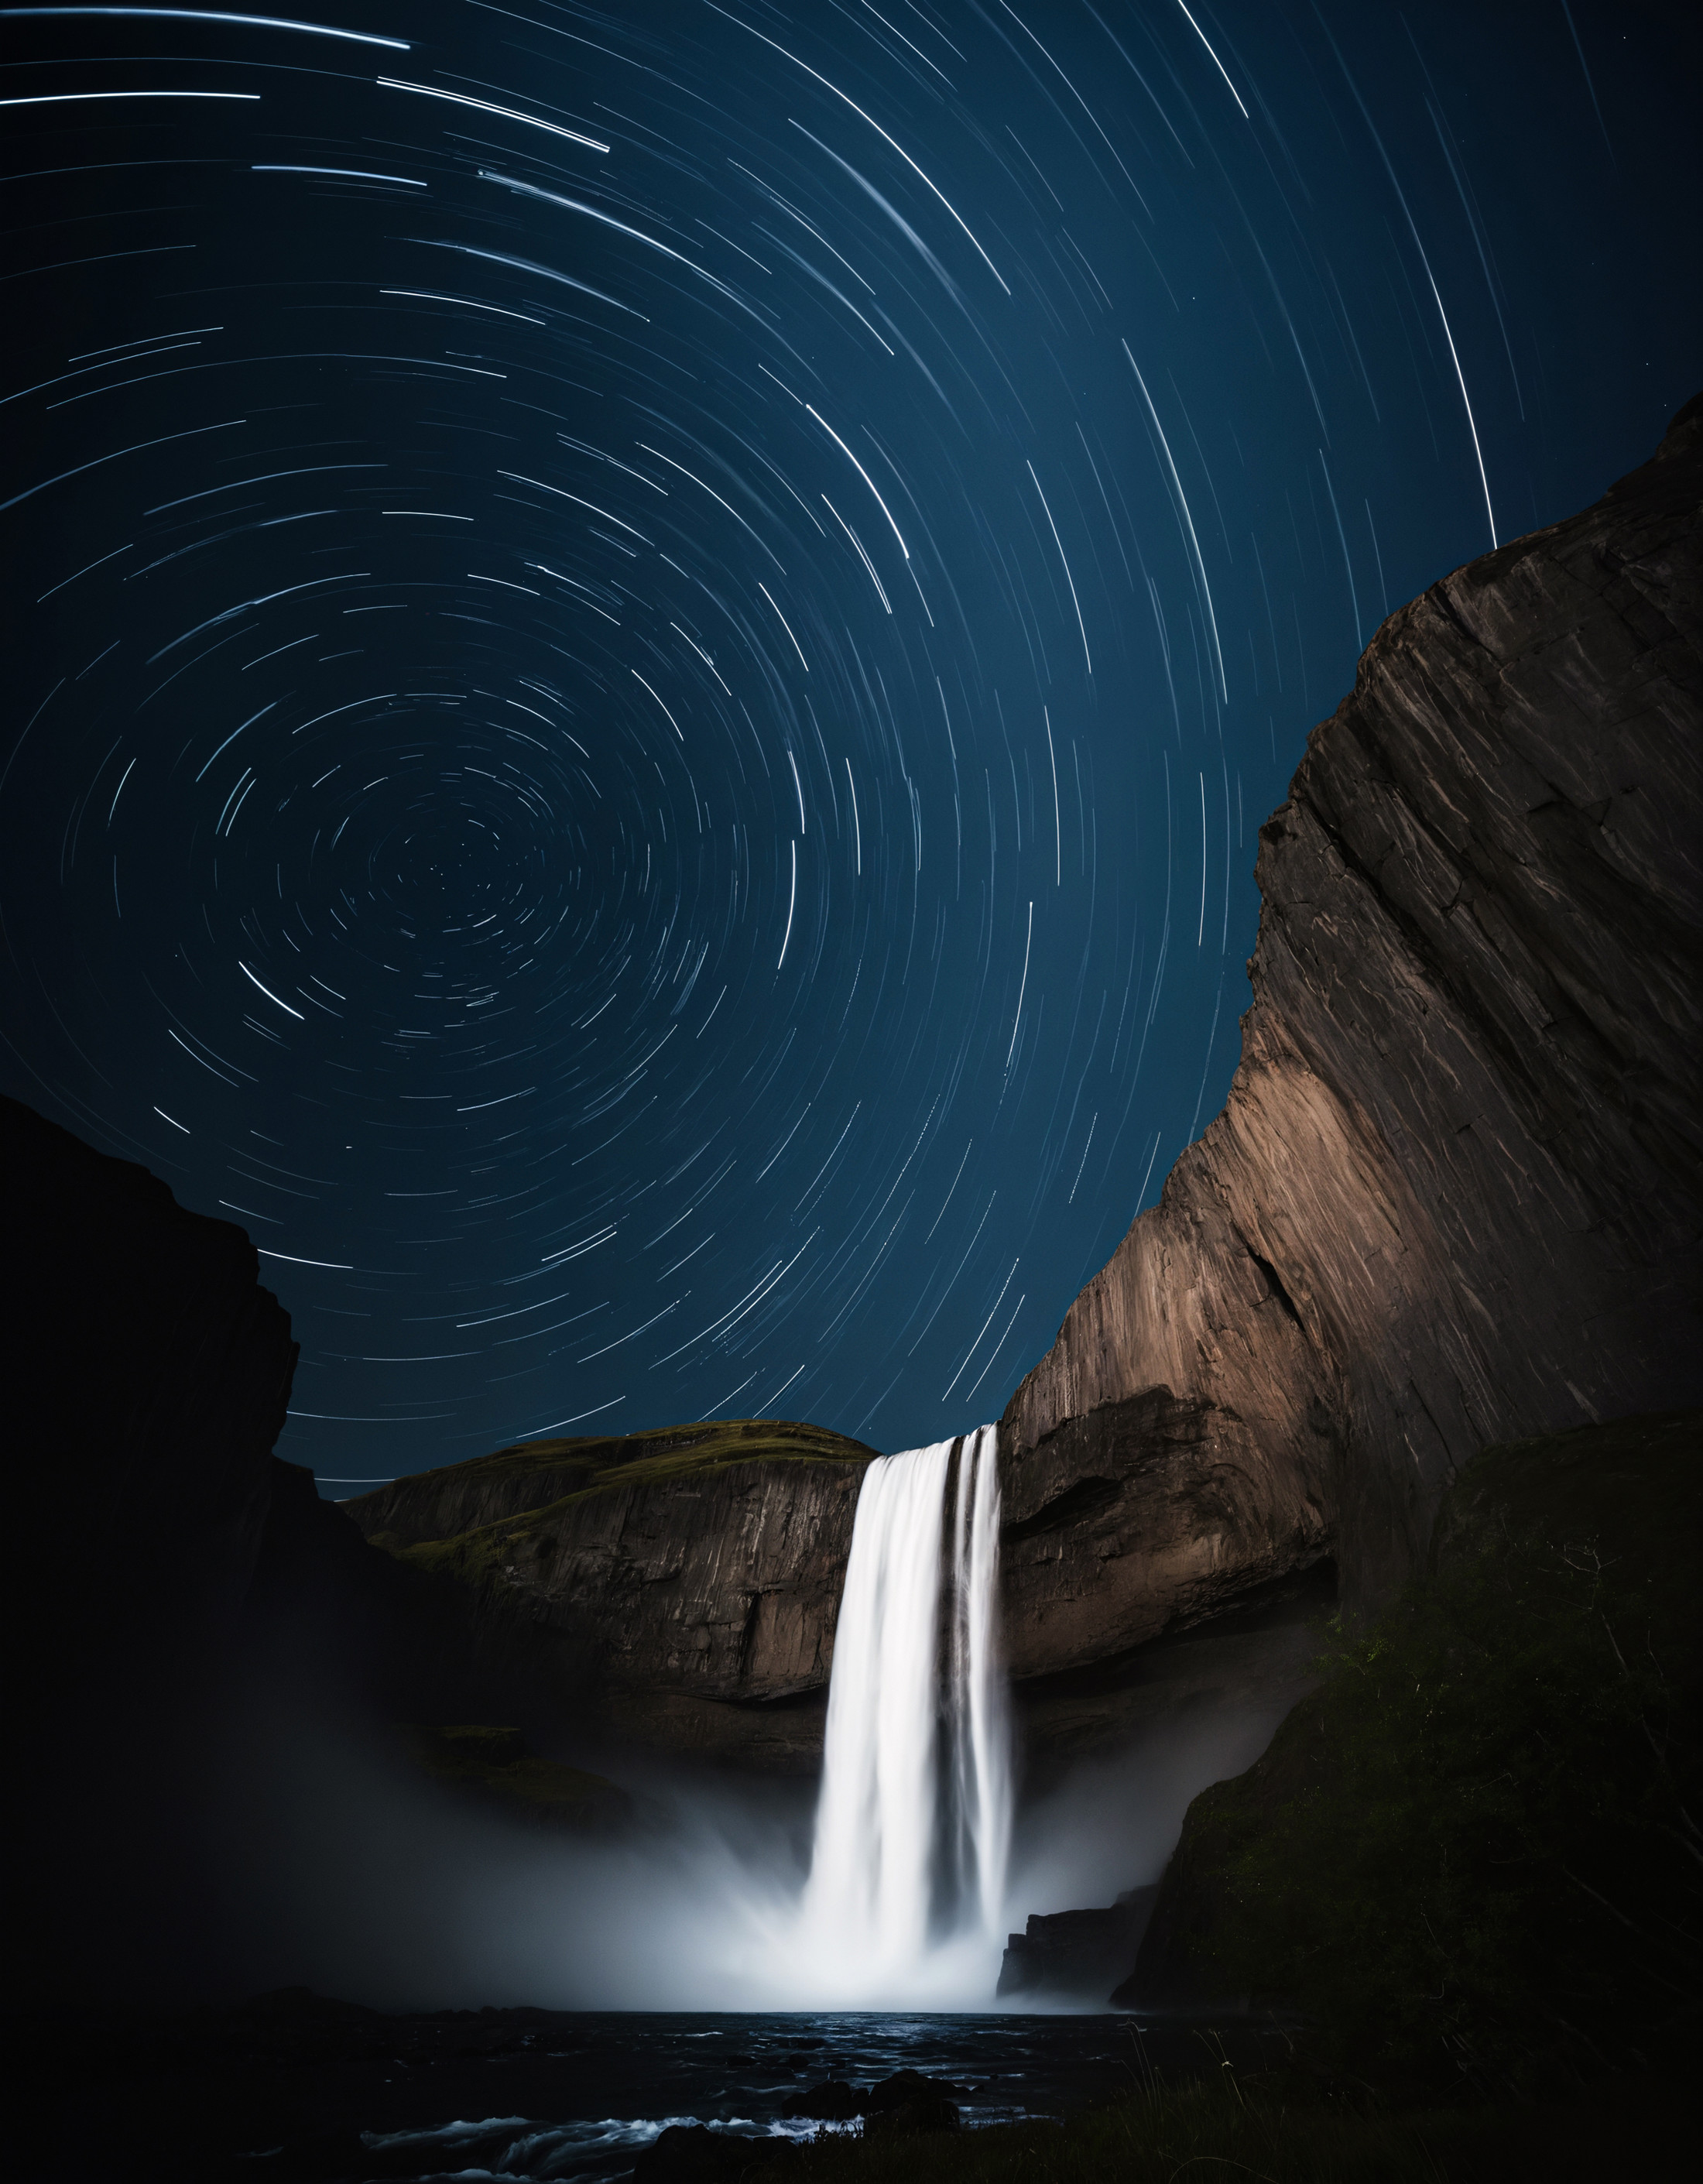 award winning photo of the night sky over a majestic norse waterfall, (star trails), zavy-lghttrl, atmospheric haze, dynam...